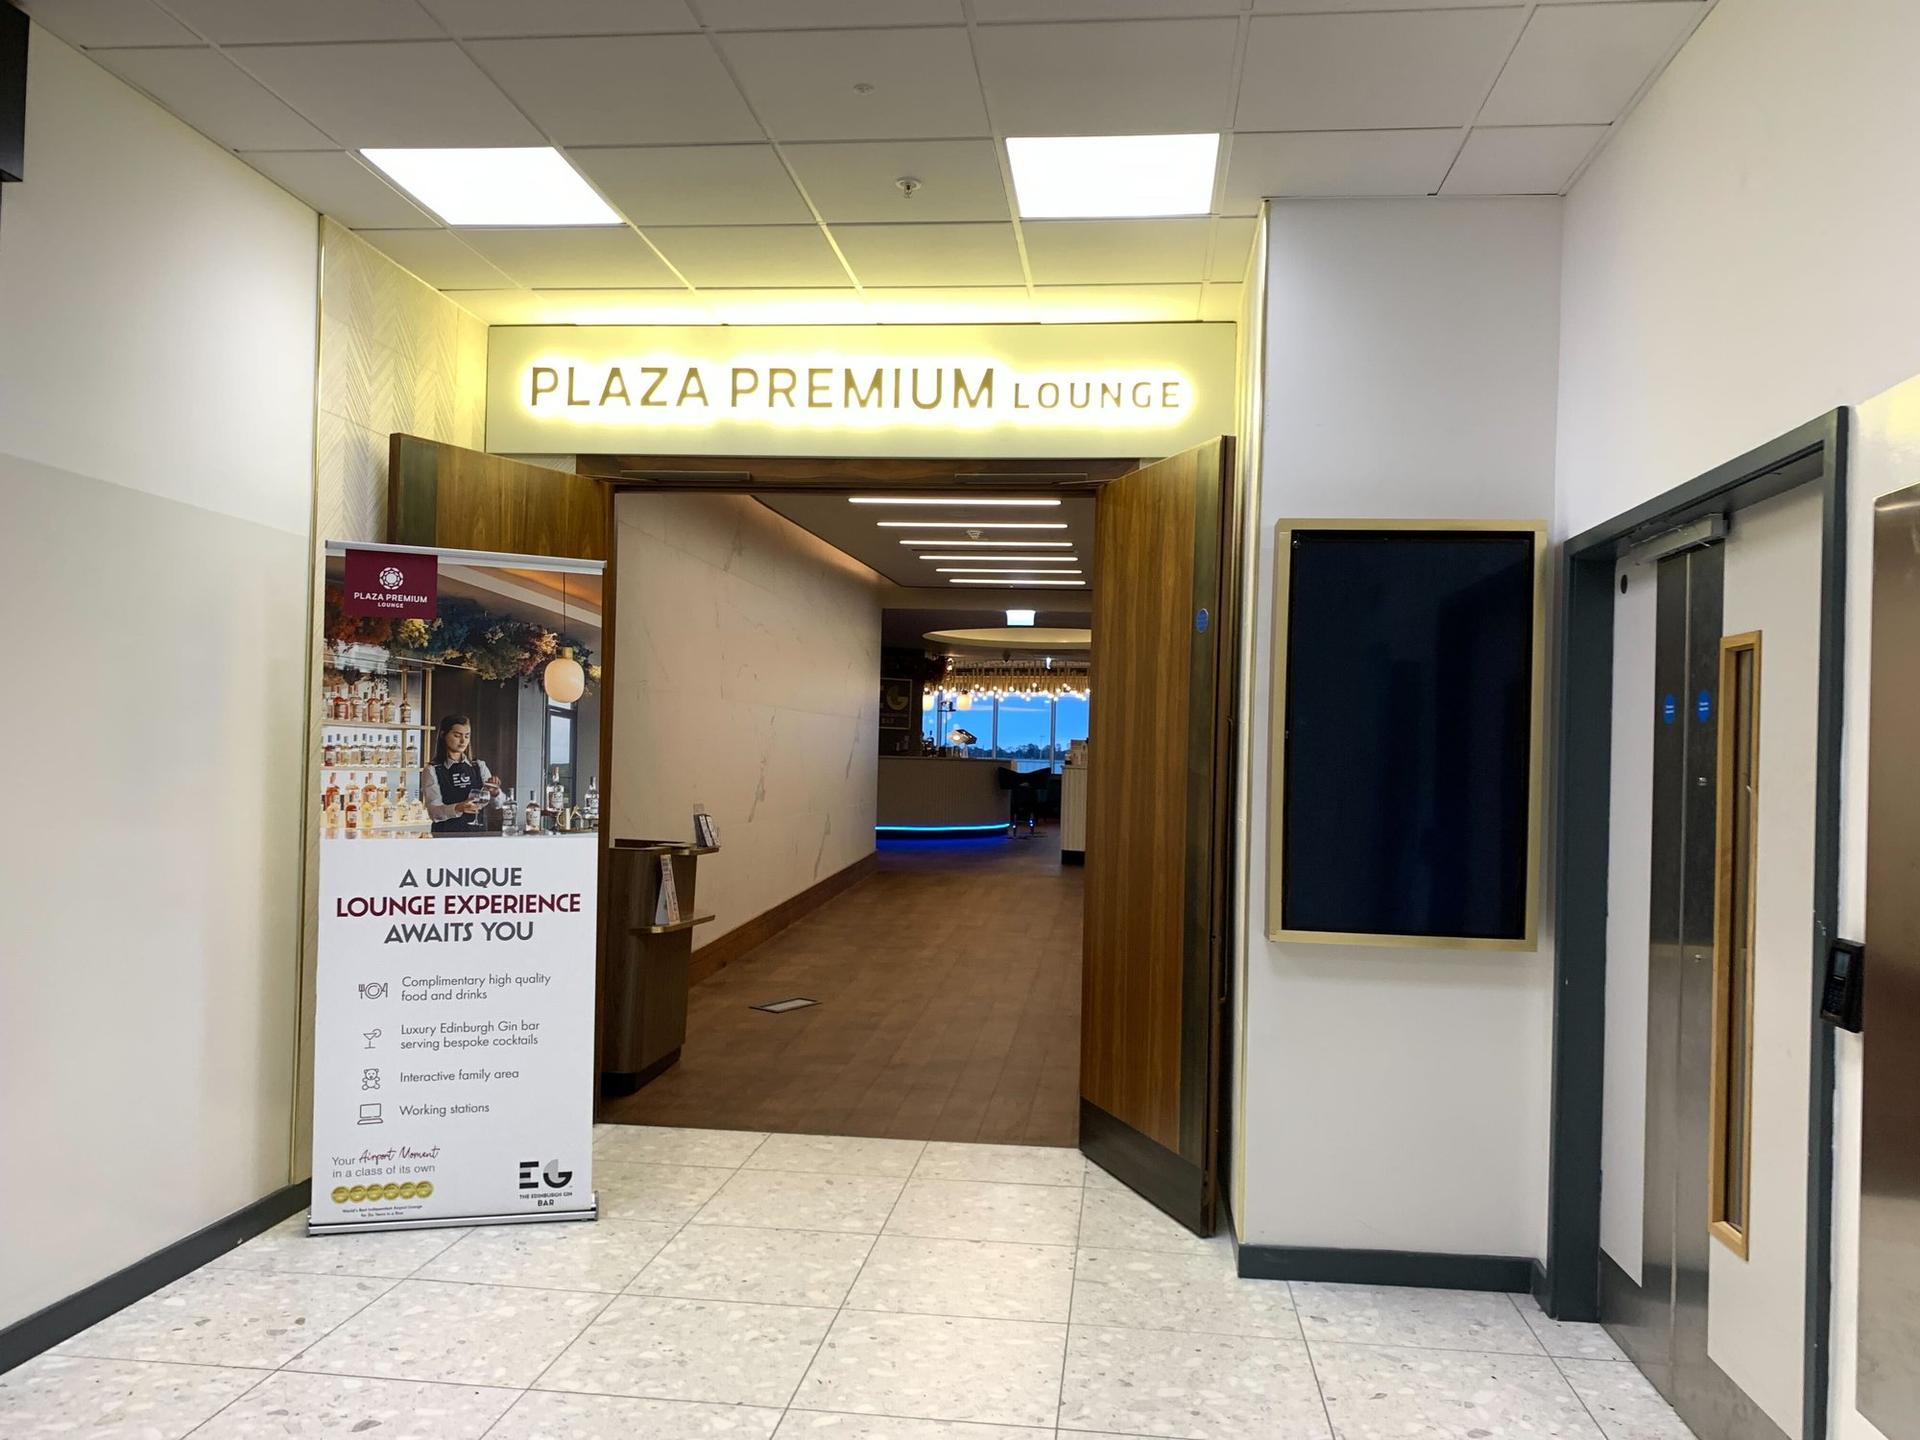 Plaza Premium Lounge image 12 of 23